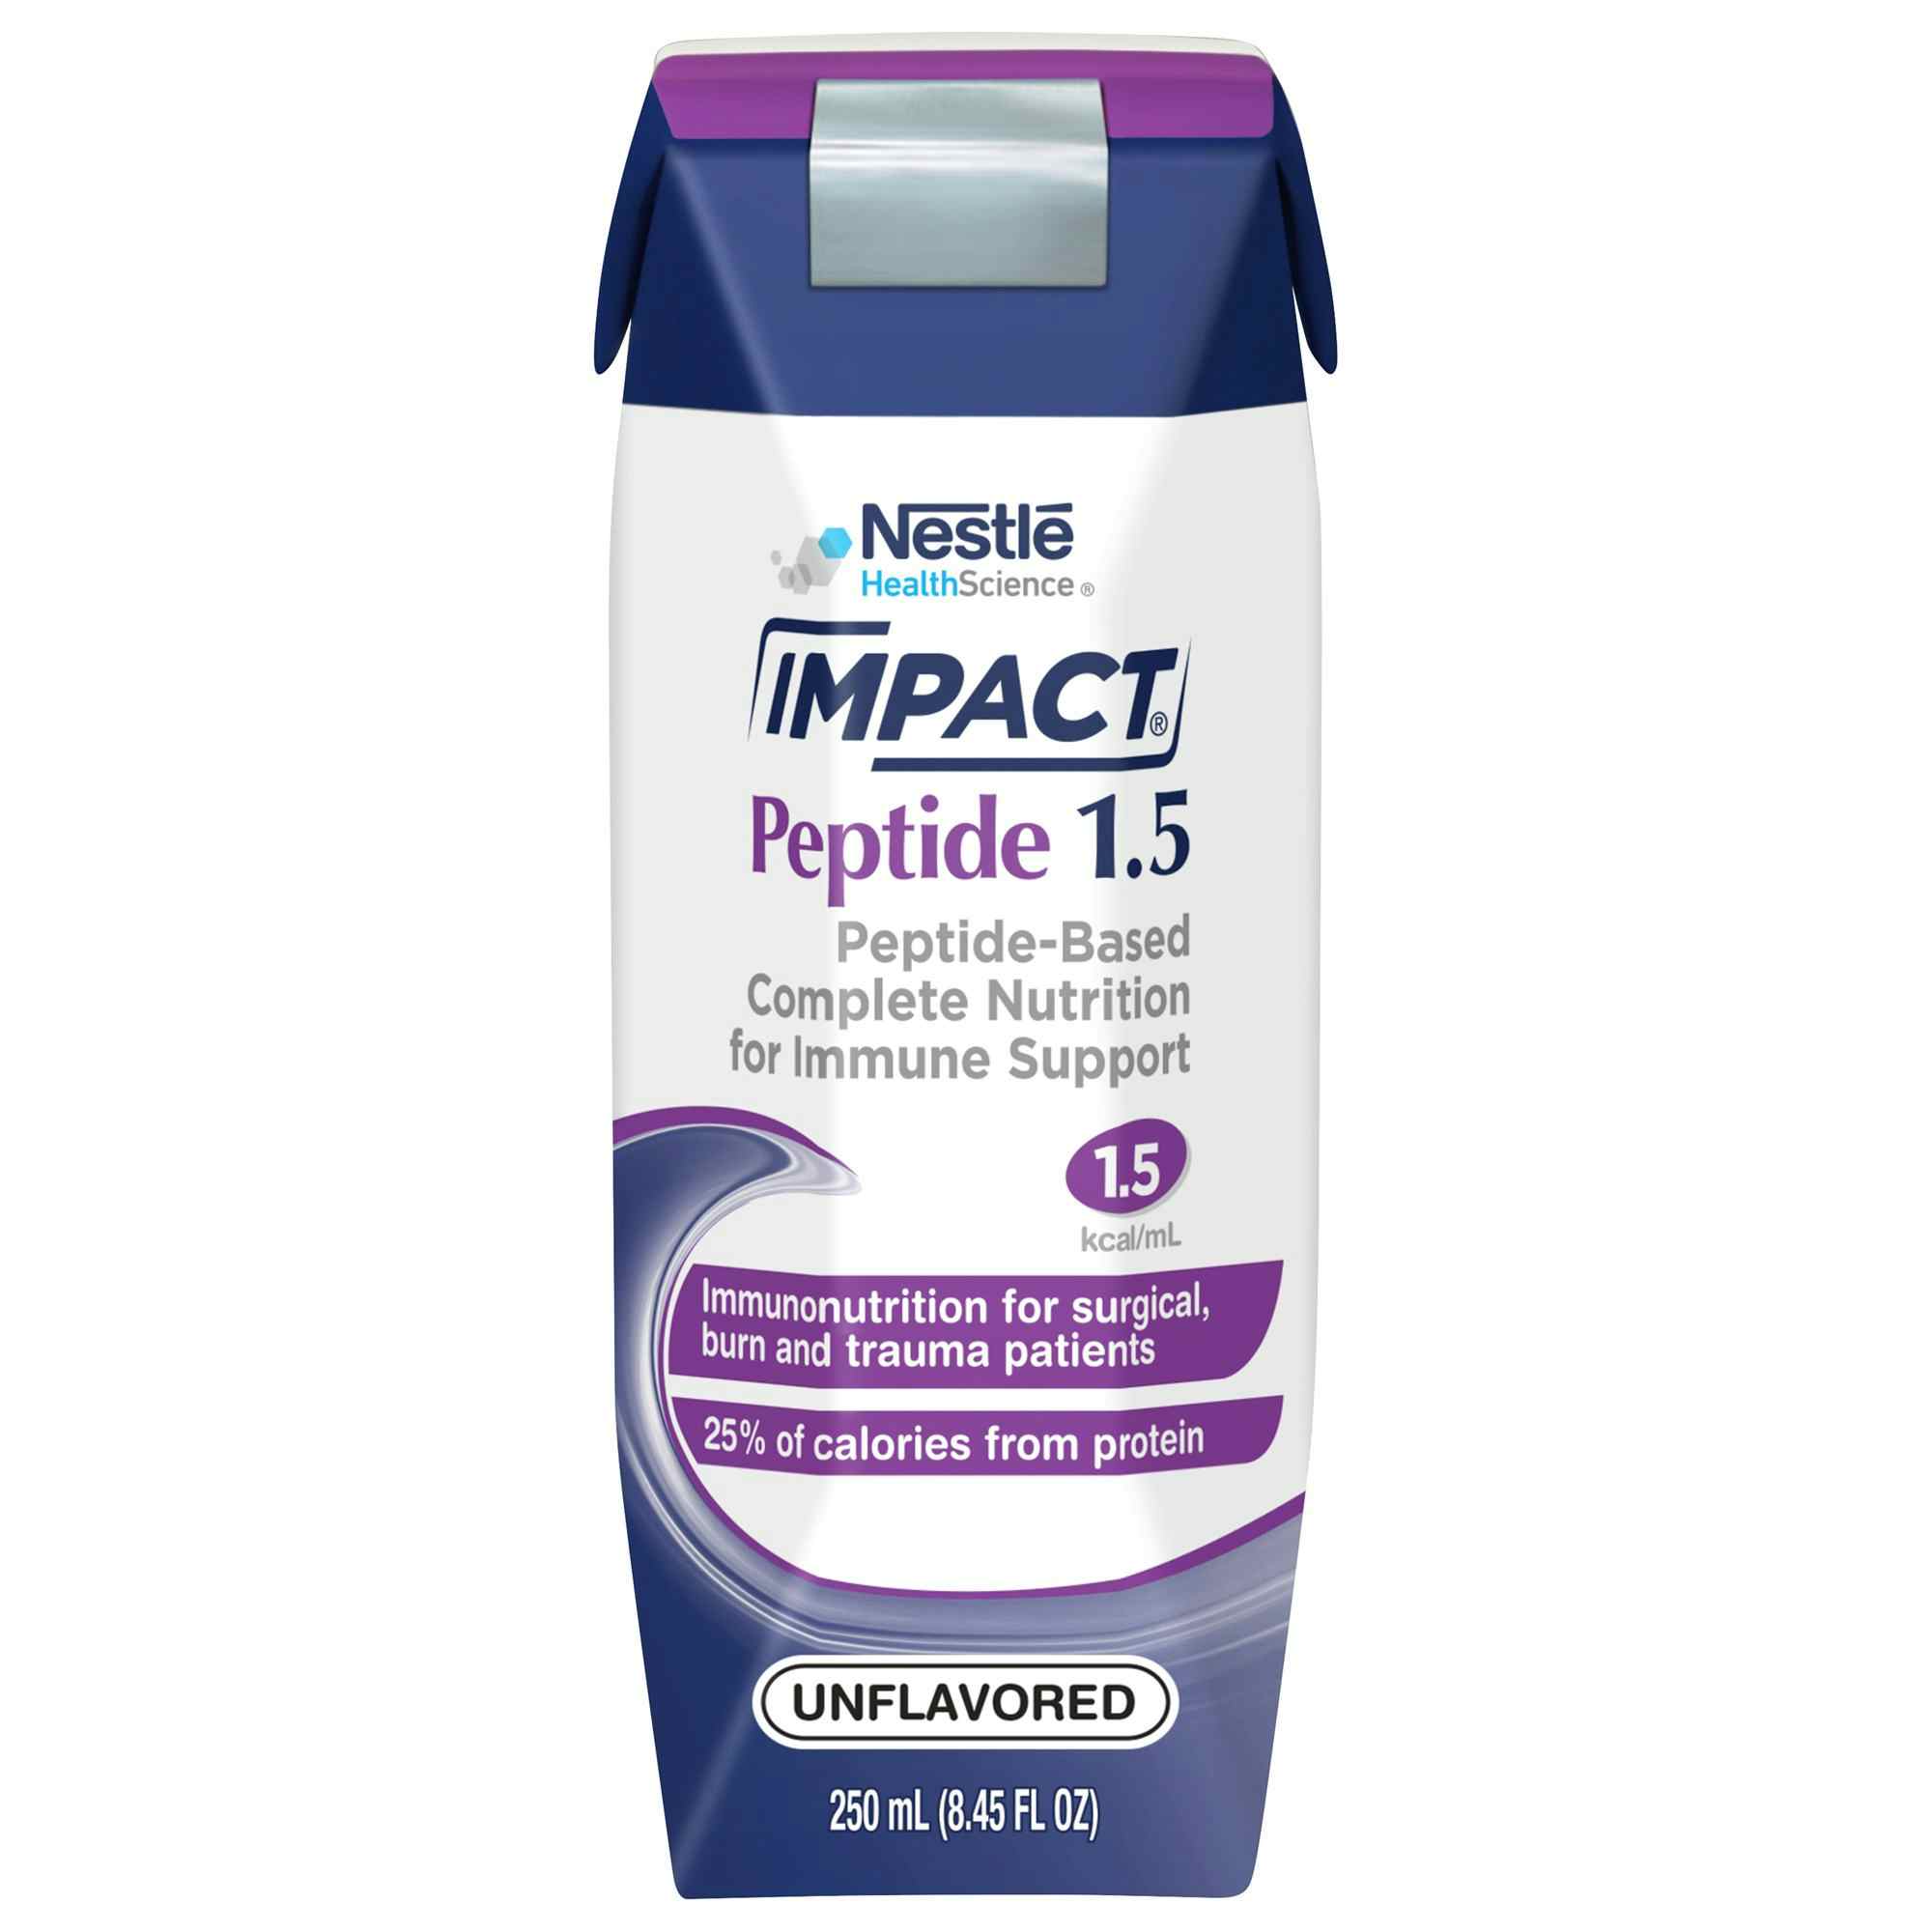 Nestle HealthScience Impact Peptide 1.5 Tube Feeding Formula, 8.4 oz., 10043900974009, 1 Each